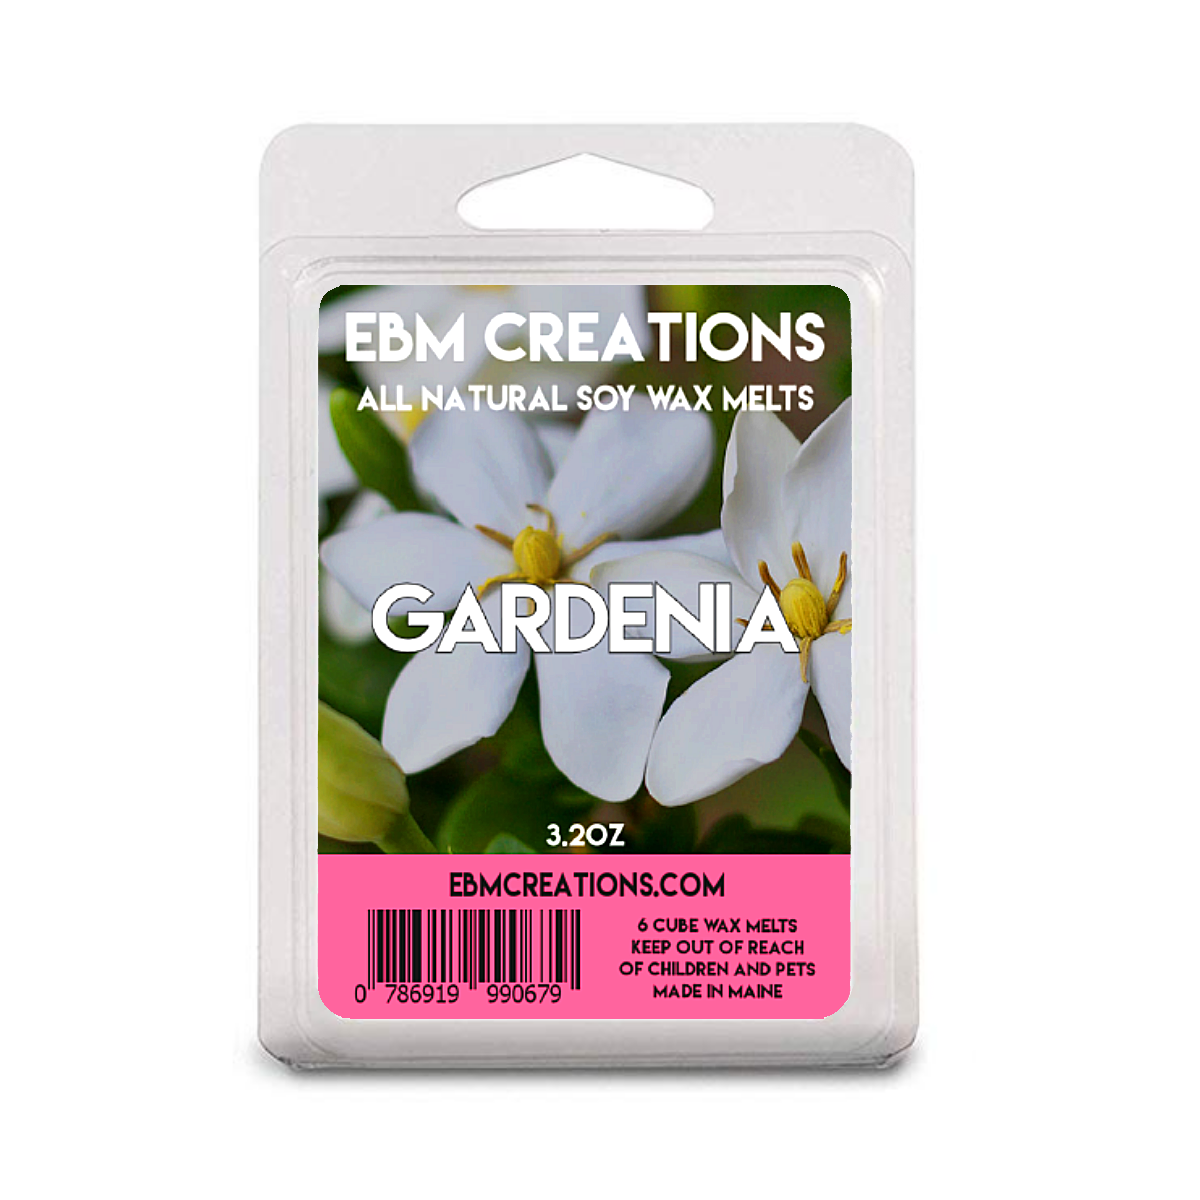 Gardenia - 3.2 oz Clamshell